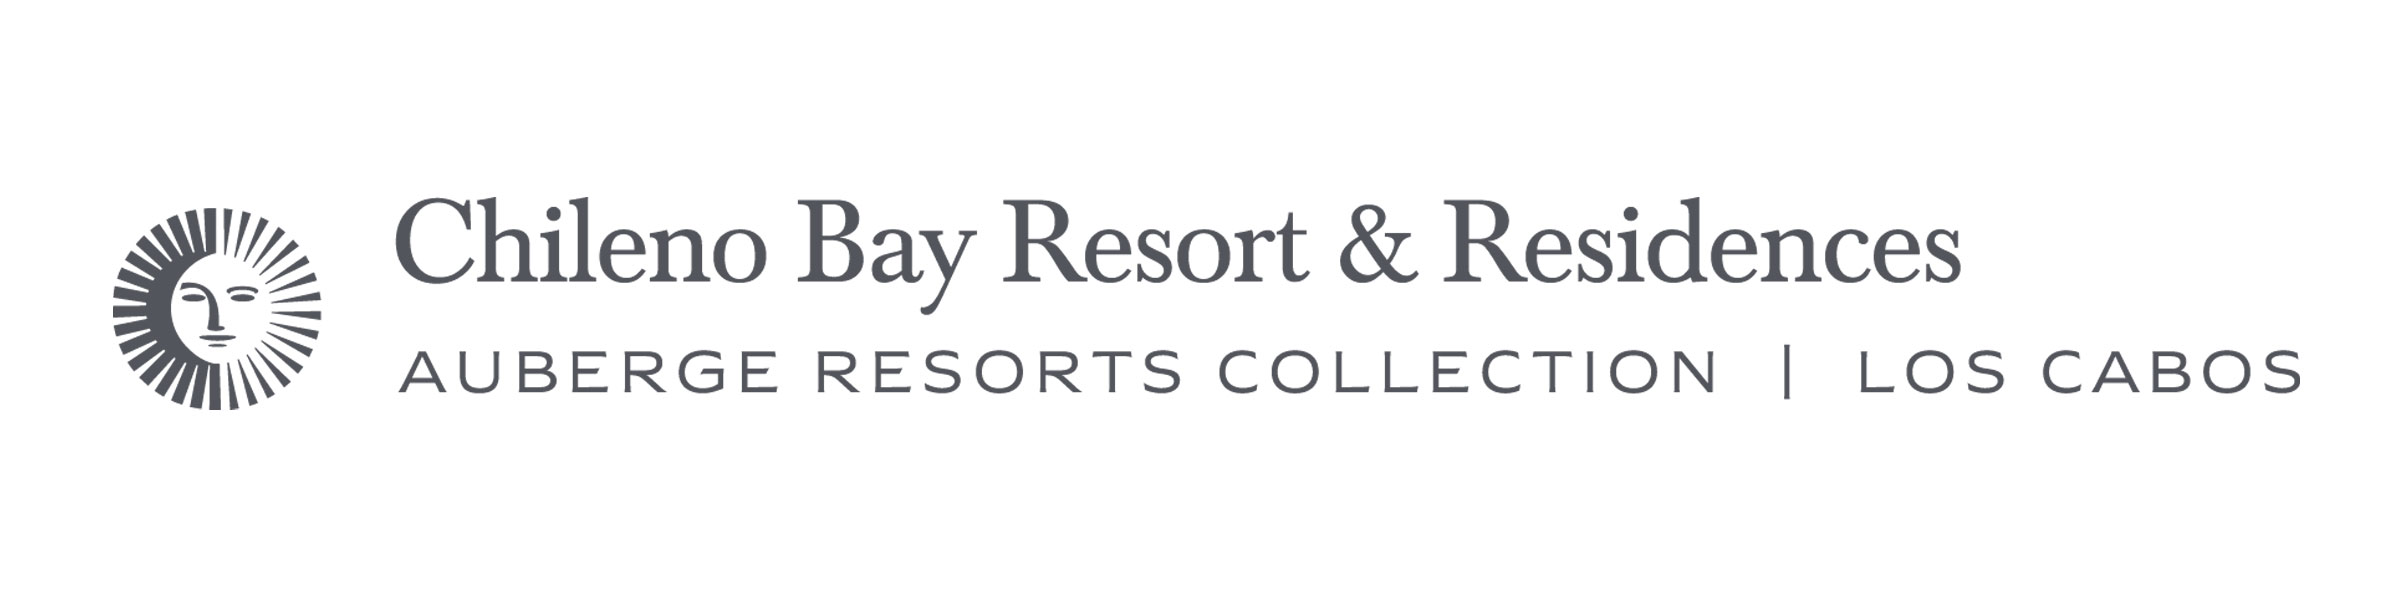 Chileno Bay Resort logo